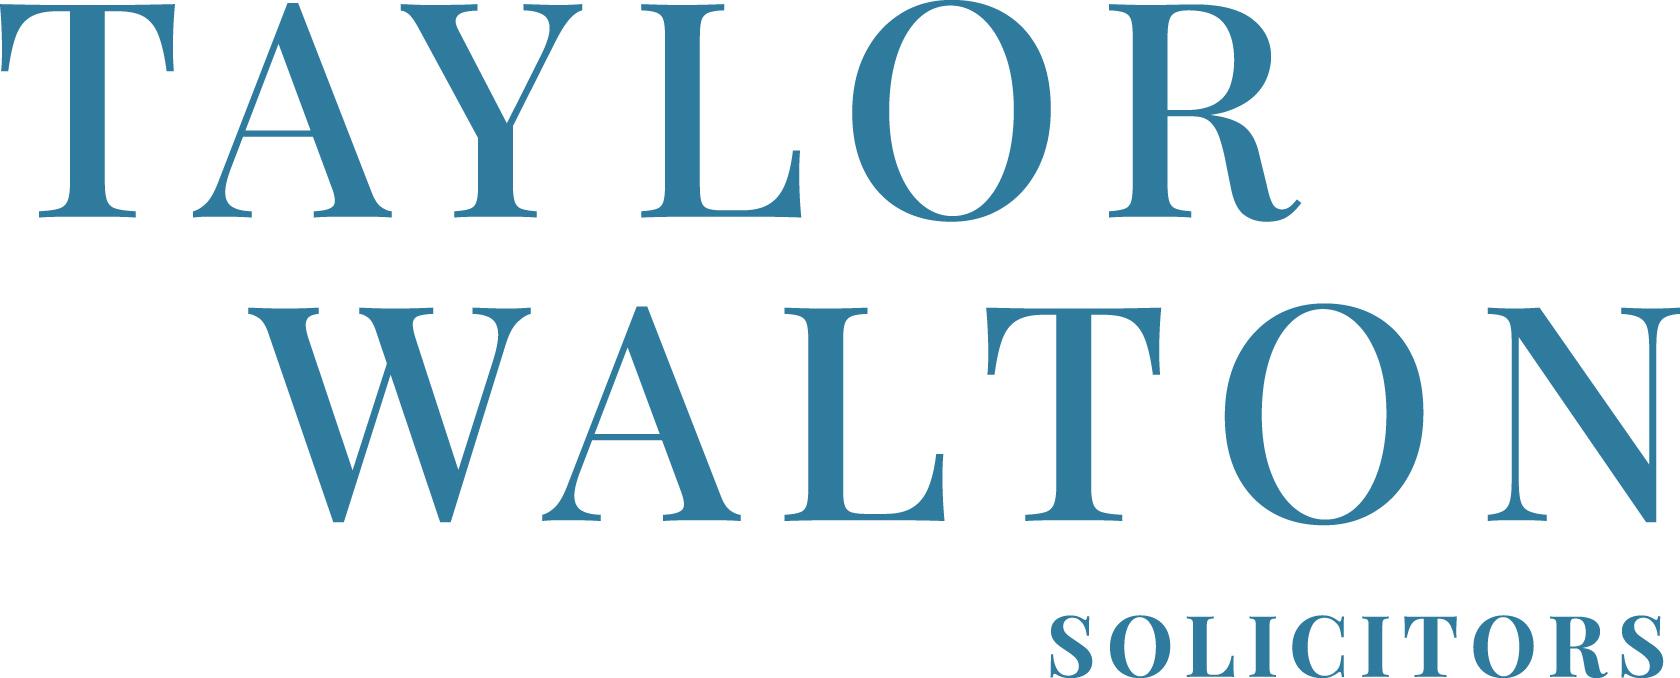 Taylor Walton logo